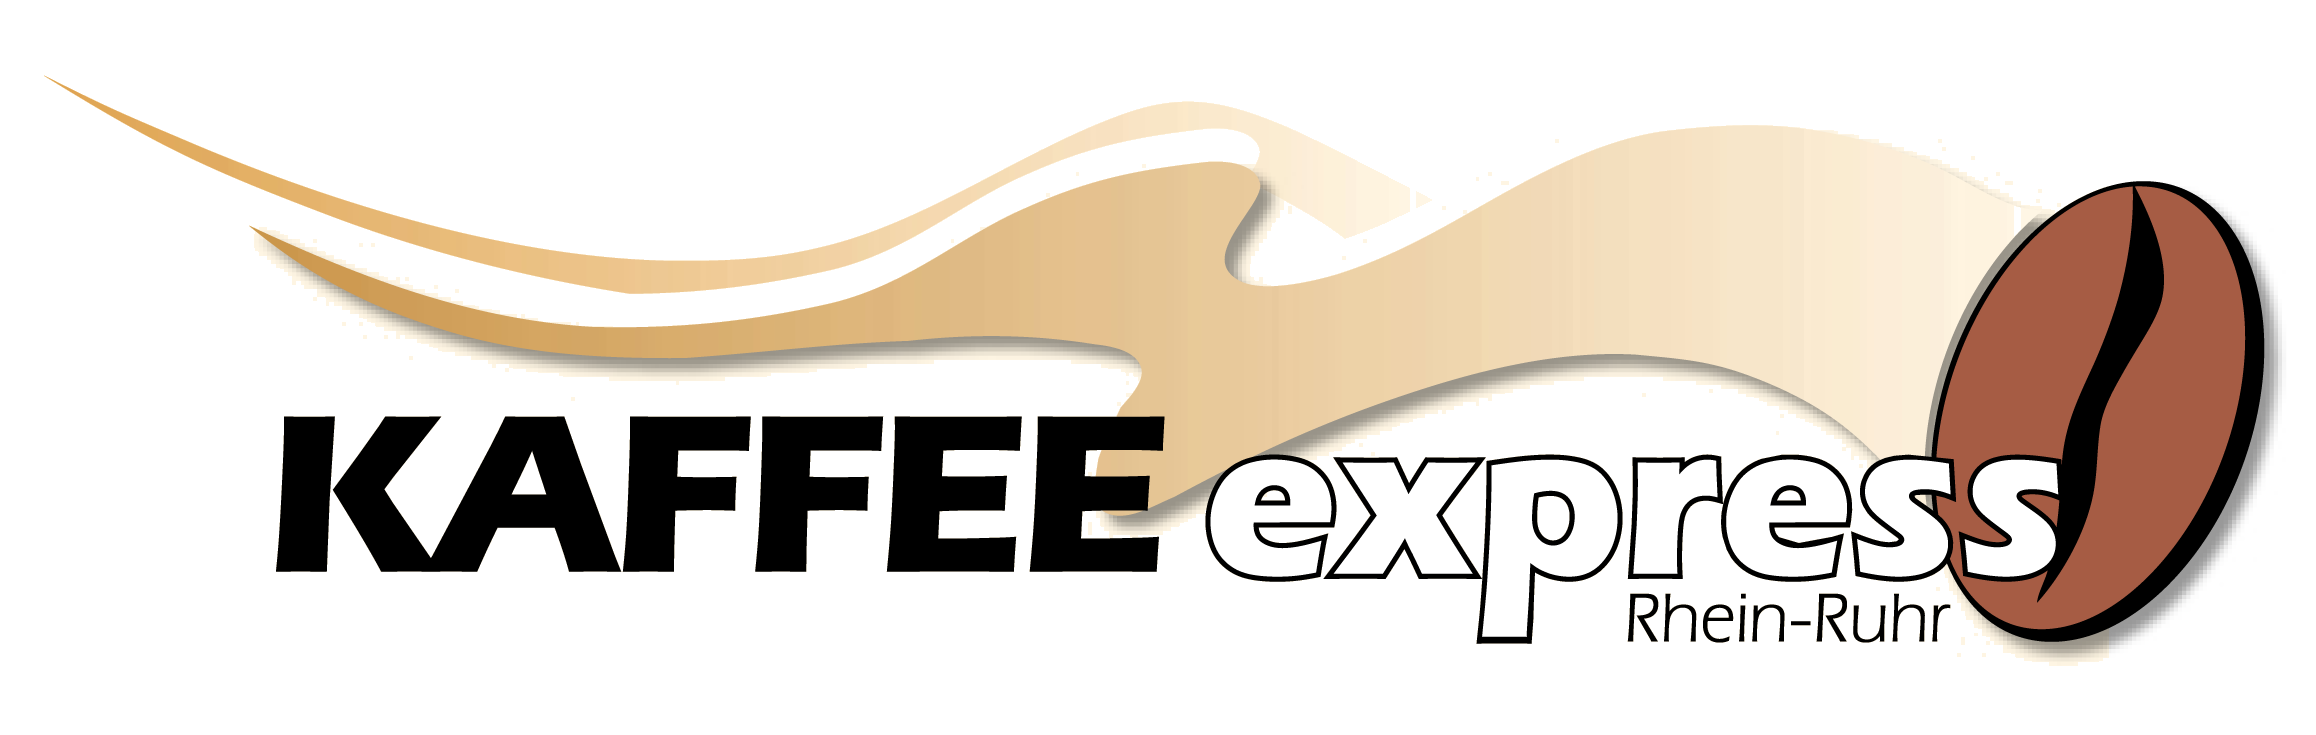 Kaffee Express Rhein-Ruhr